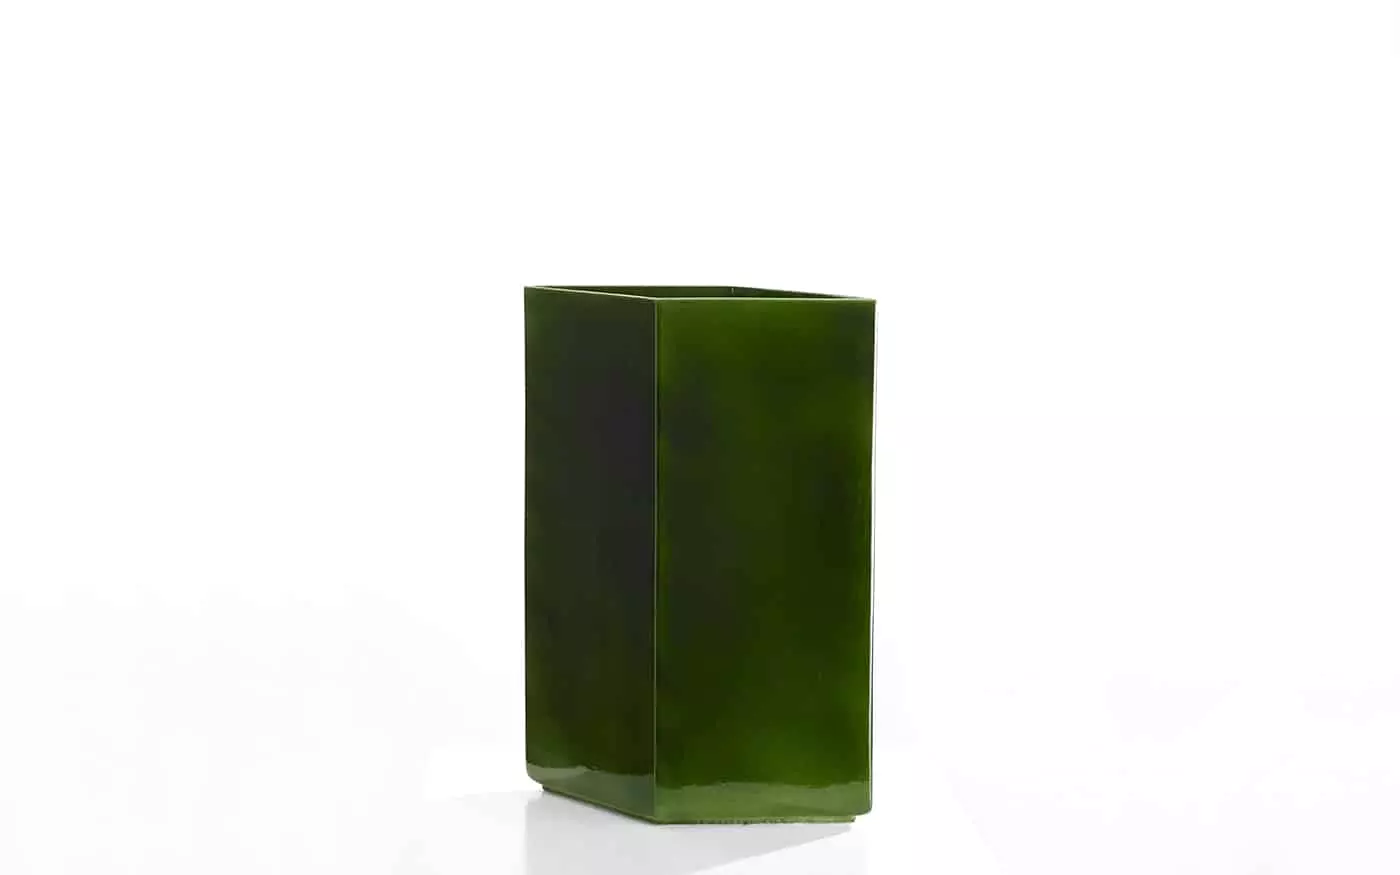 Vase Losange 67 green - Ronan & Erwan Bouroullec - Miscellaneous - Galerie kreo